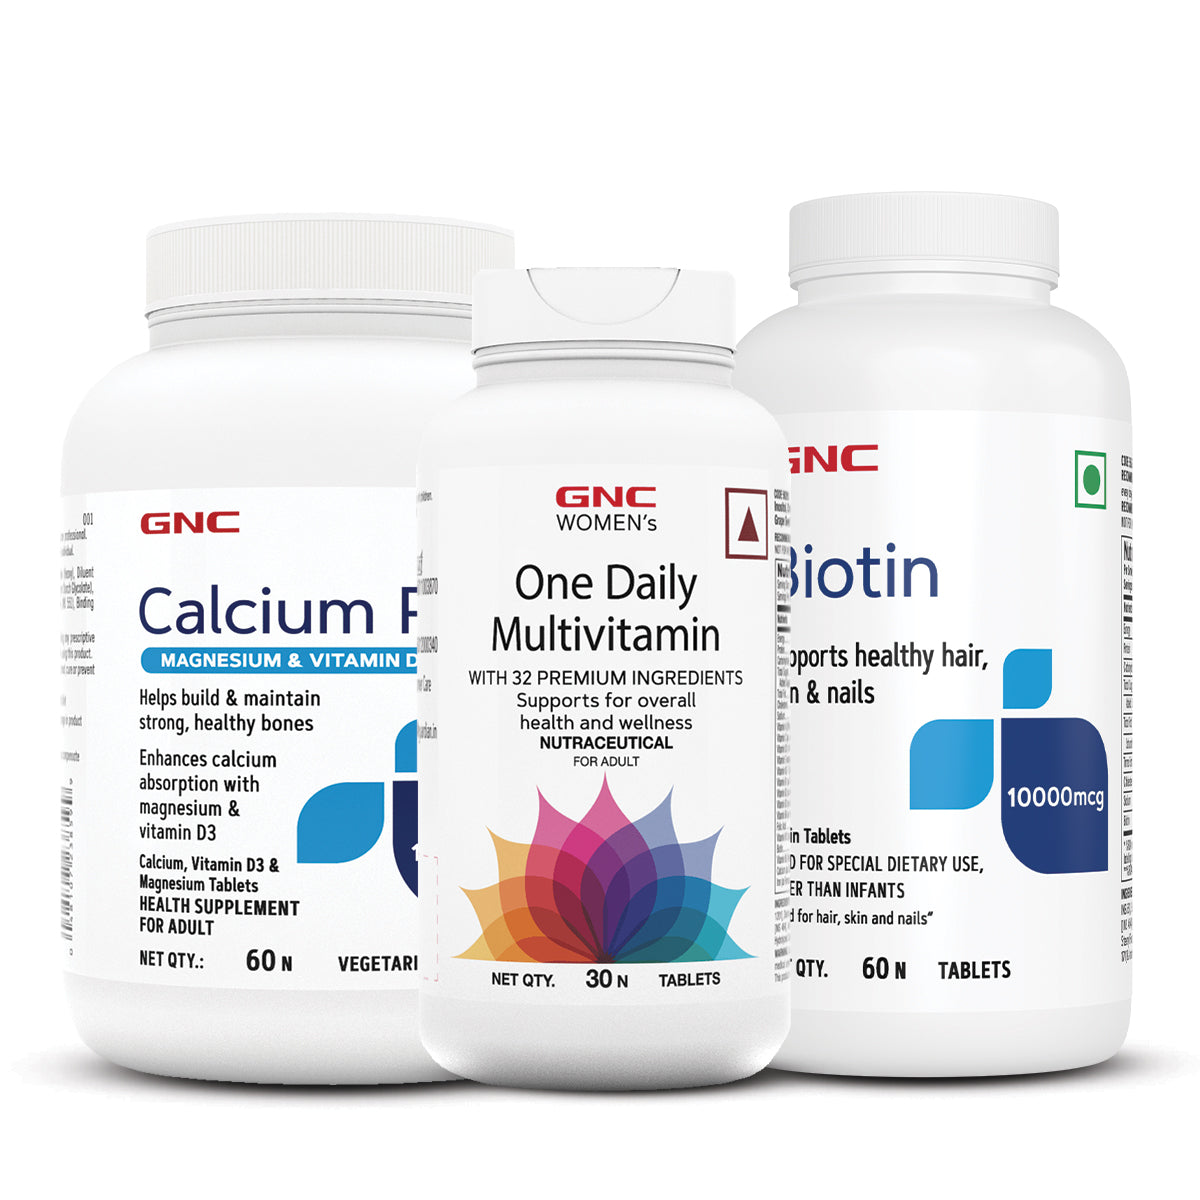 GNC Calcium Plus With Magnesium & Vitamin D3 + Women's One Daily Multivitamin for Women  + Biotin 10000mcg Tablets